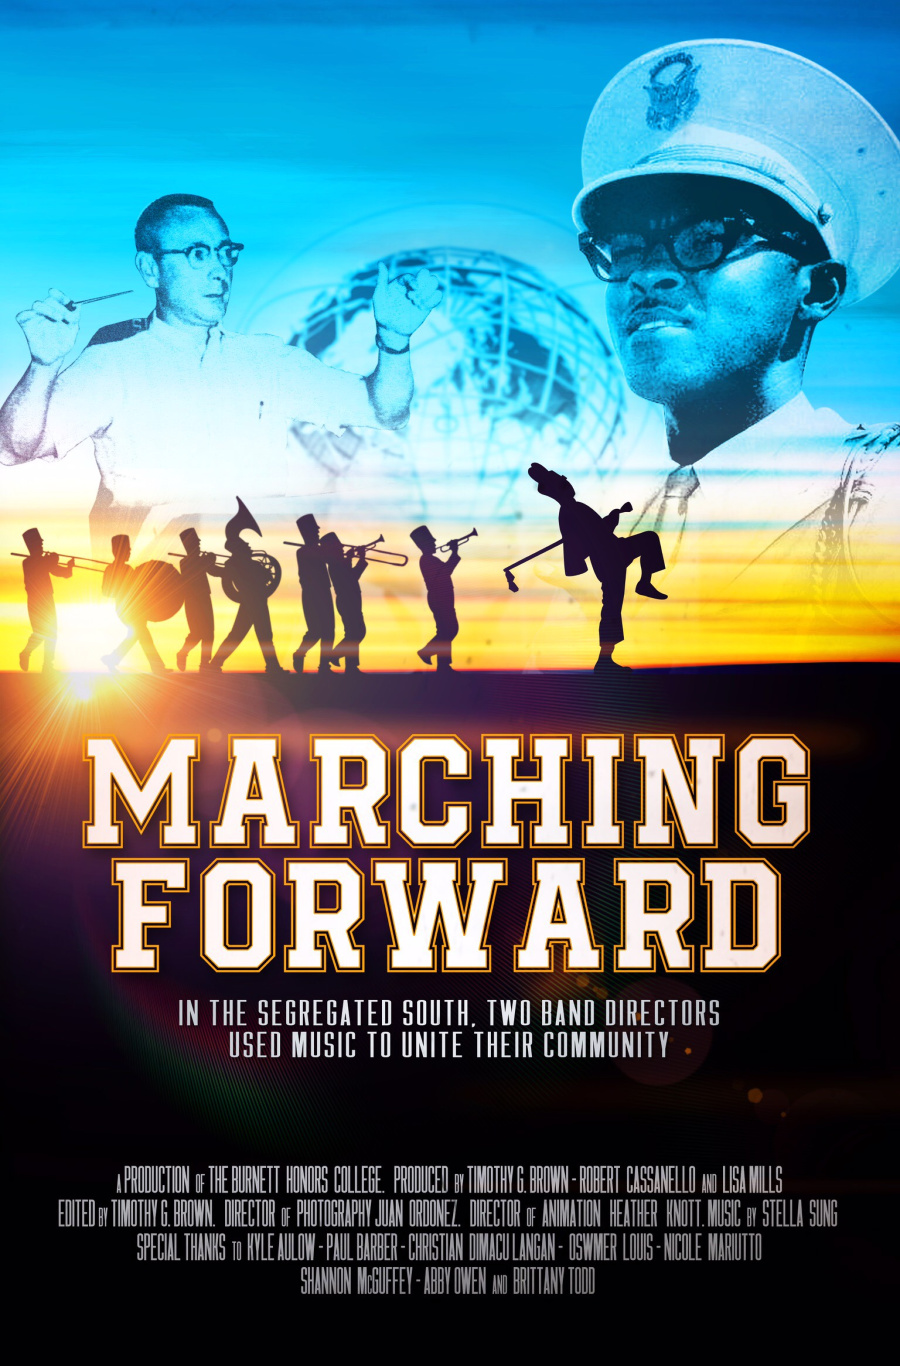 Marching Forward, a documentary film by Lisa Mills